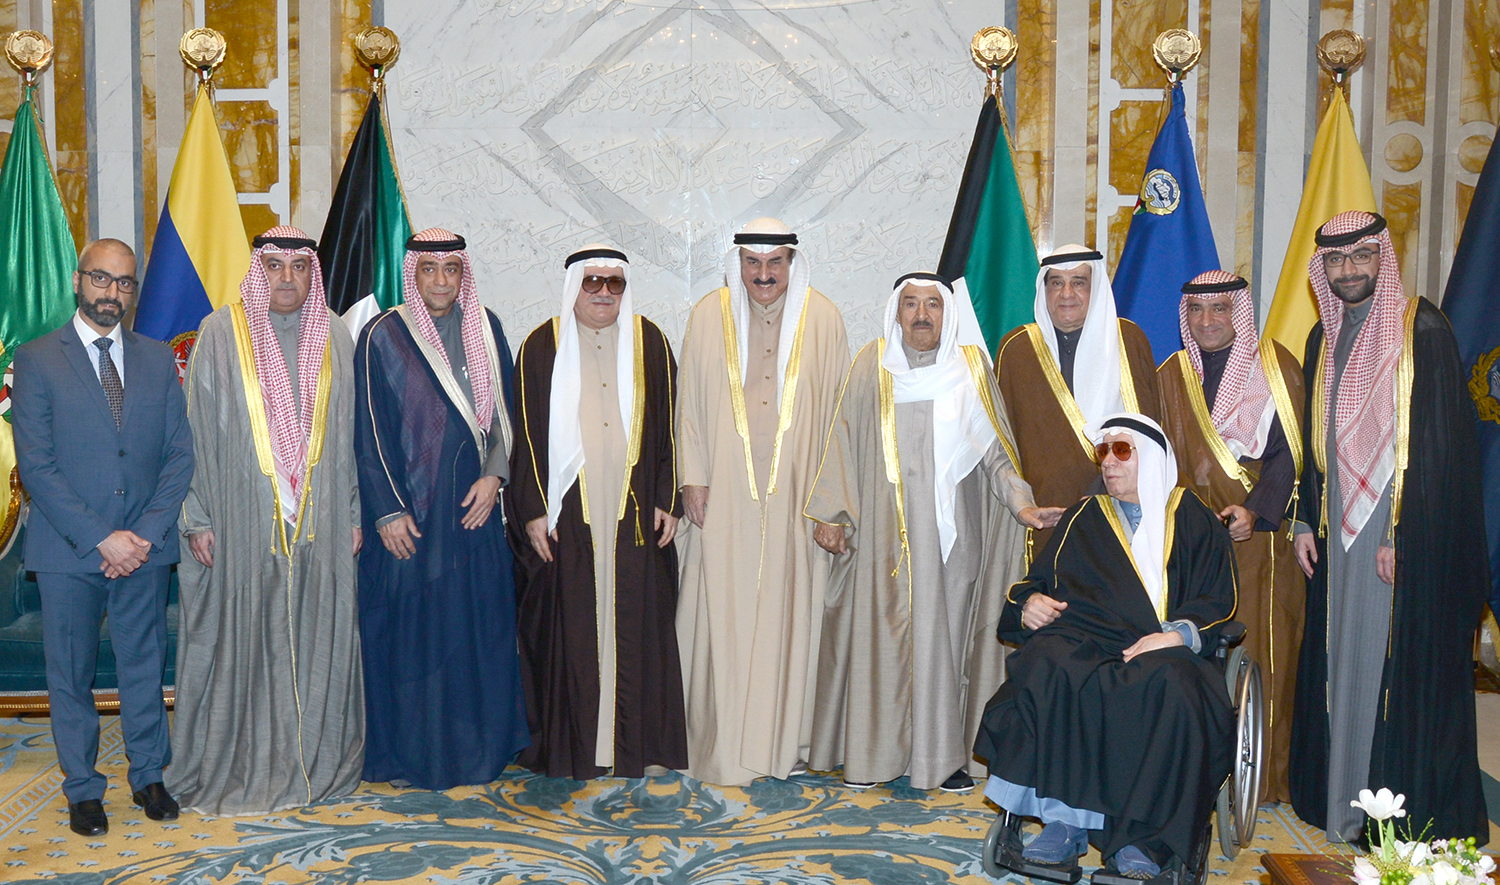 His Highness the Amir Sheikh Sabah Al-Ahmad Al-Jaber Al-Sabah receives Abdulfatah Mohammad Marafi, Abdulelah Mohammad Marafi, Mohammad Taqi Marafi, Yagoub Sadiq Marafi and Yosef Sadiq Marafi